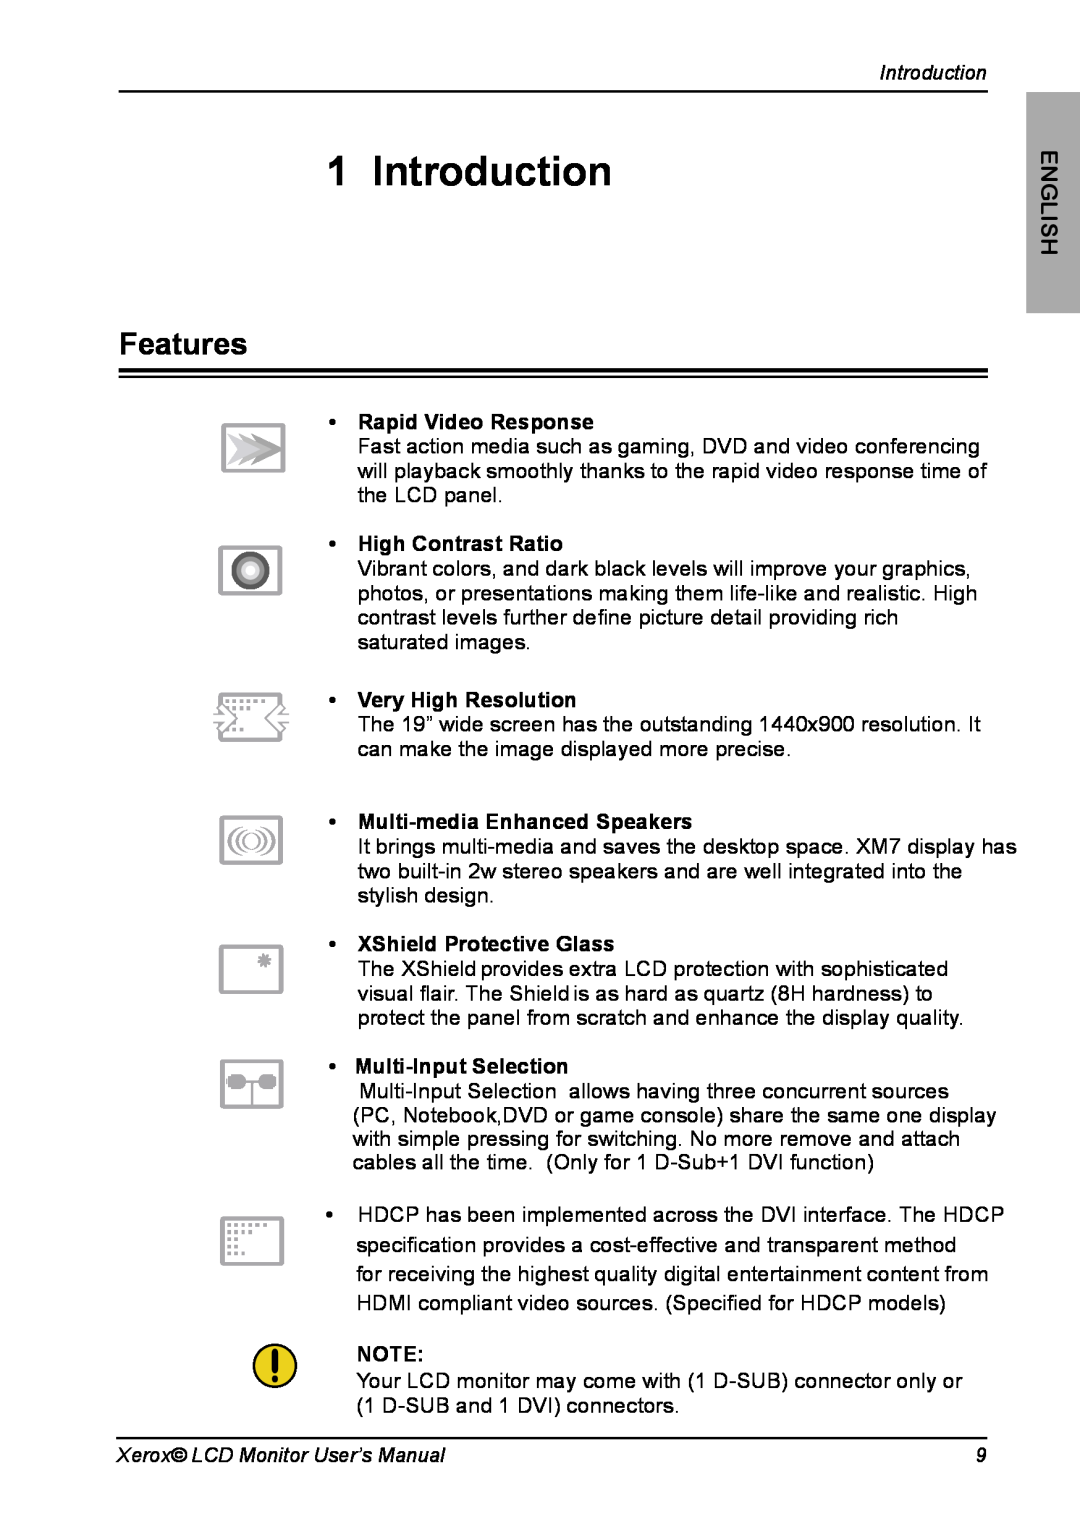 Xerox XM7-19w manual Introduction, Features, English, Xerox LCD Monitor User’s Manual 